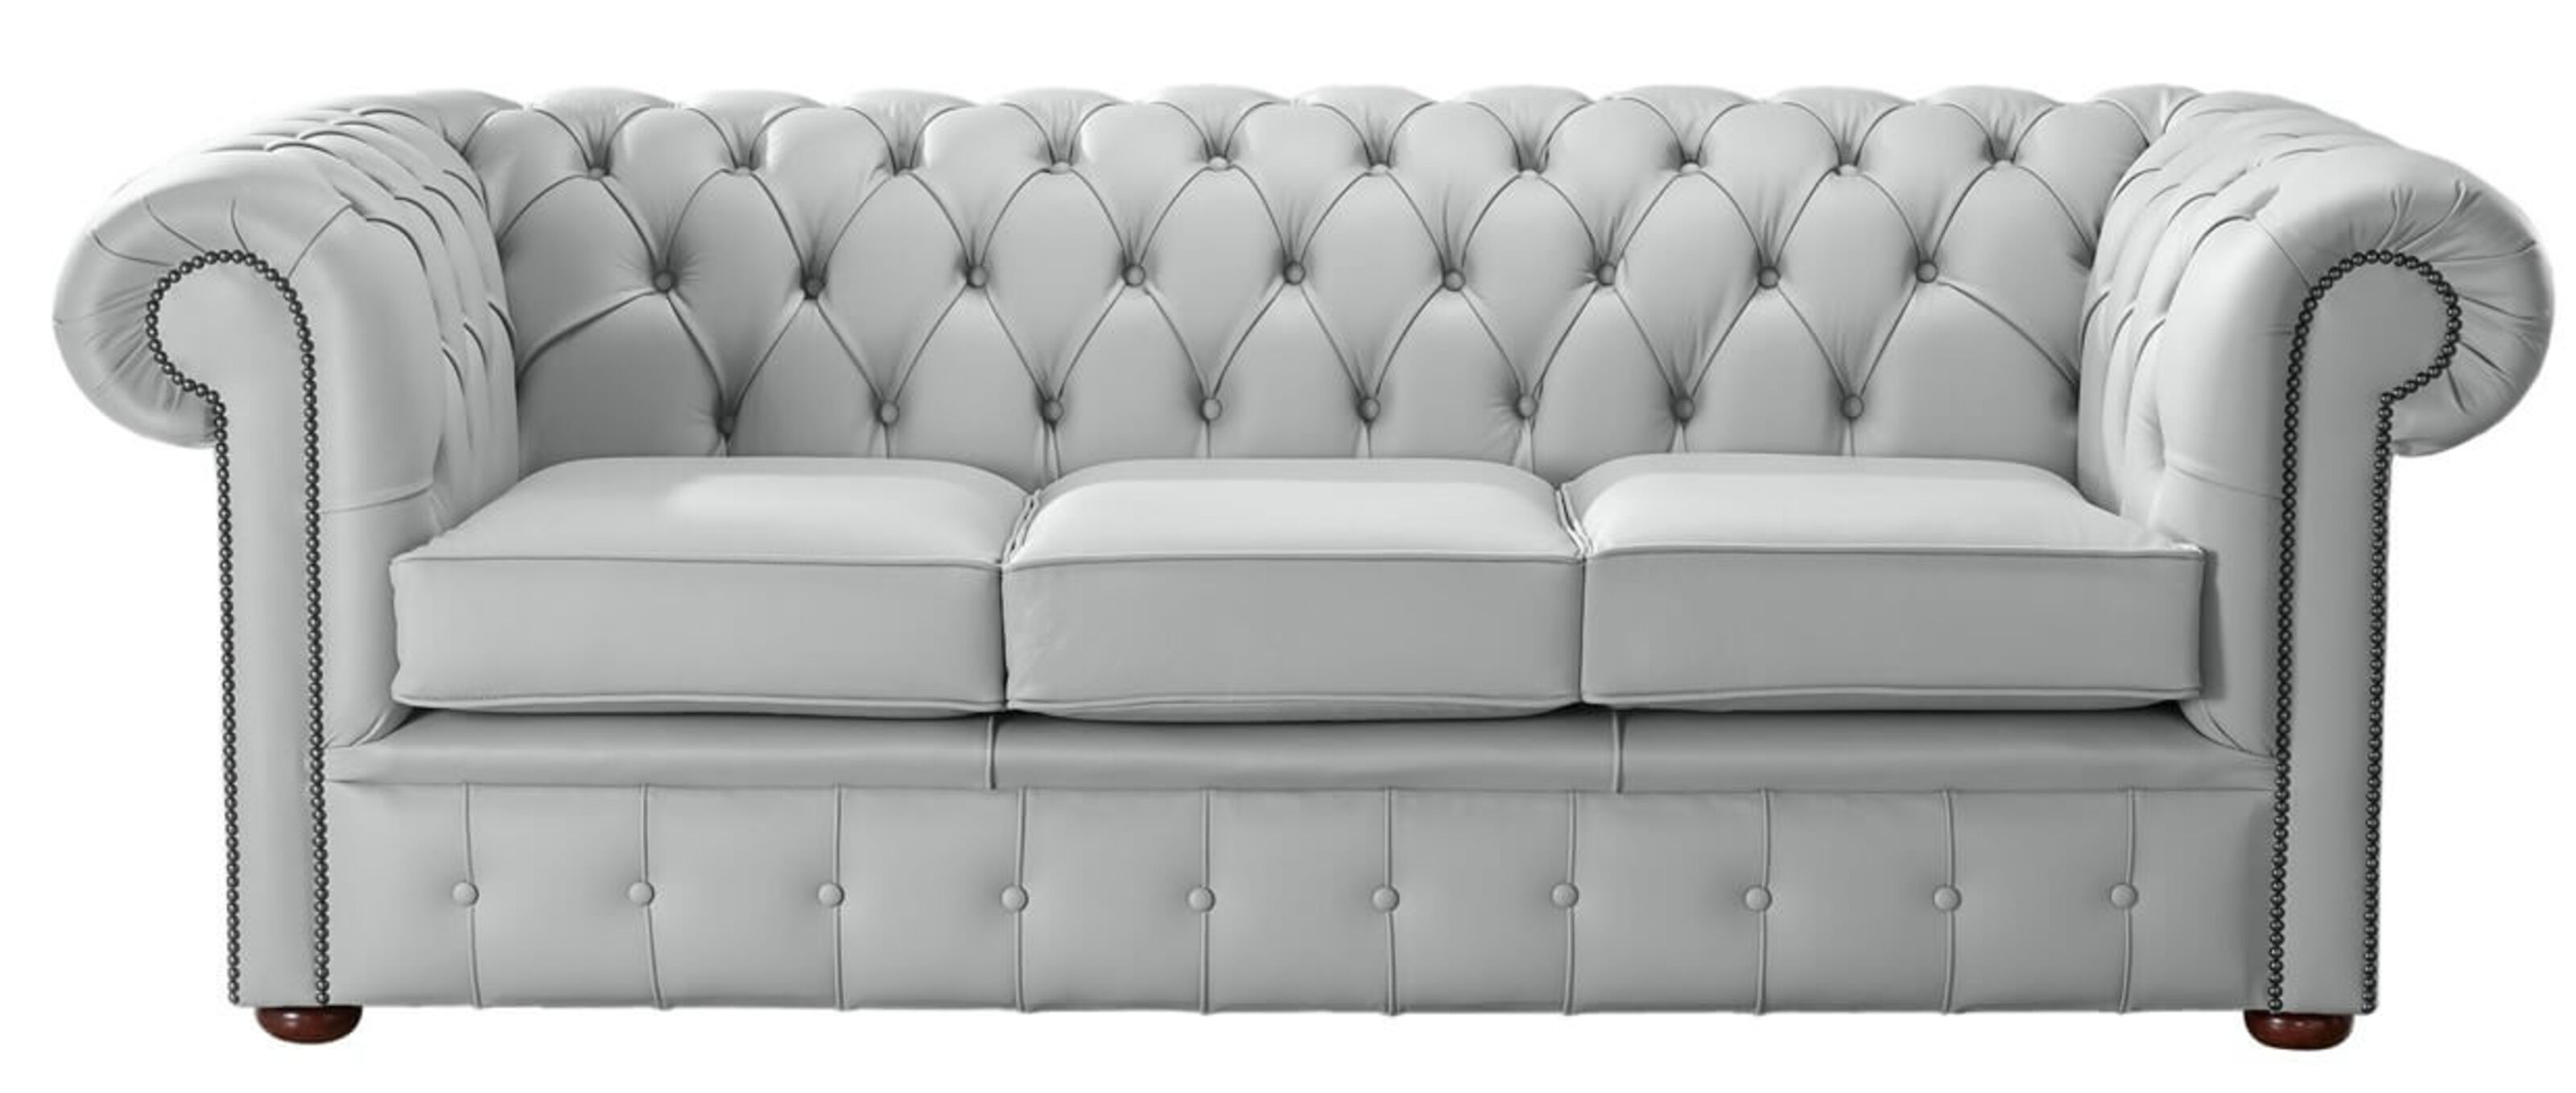 used grey leather sofa